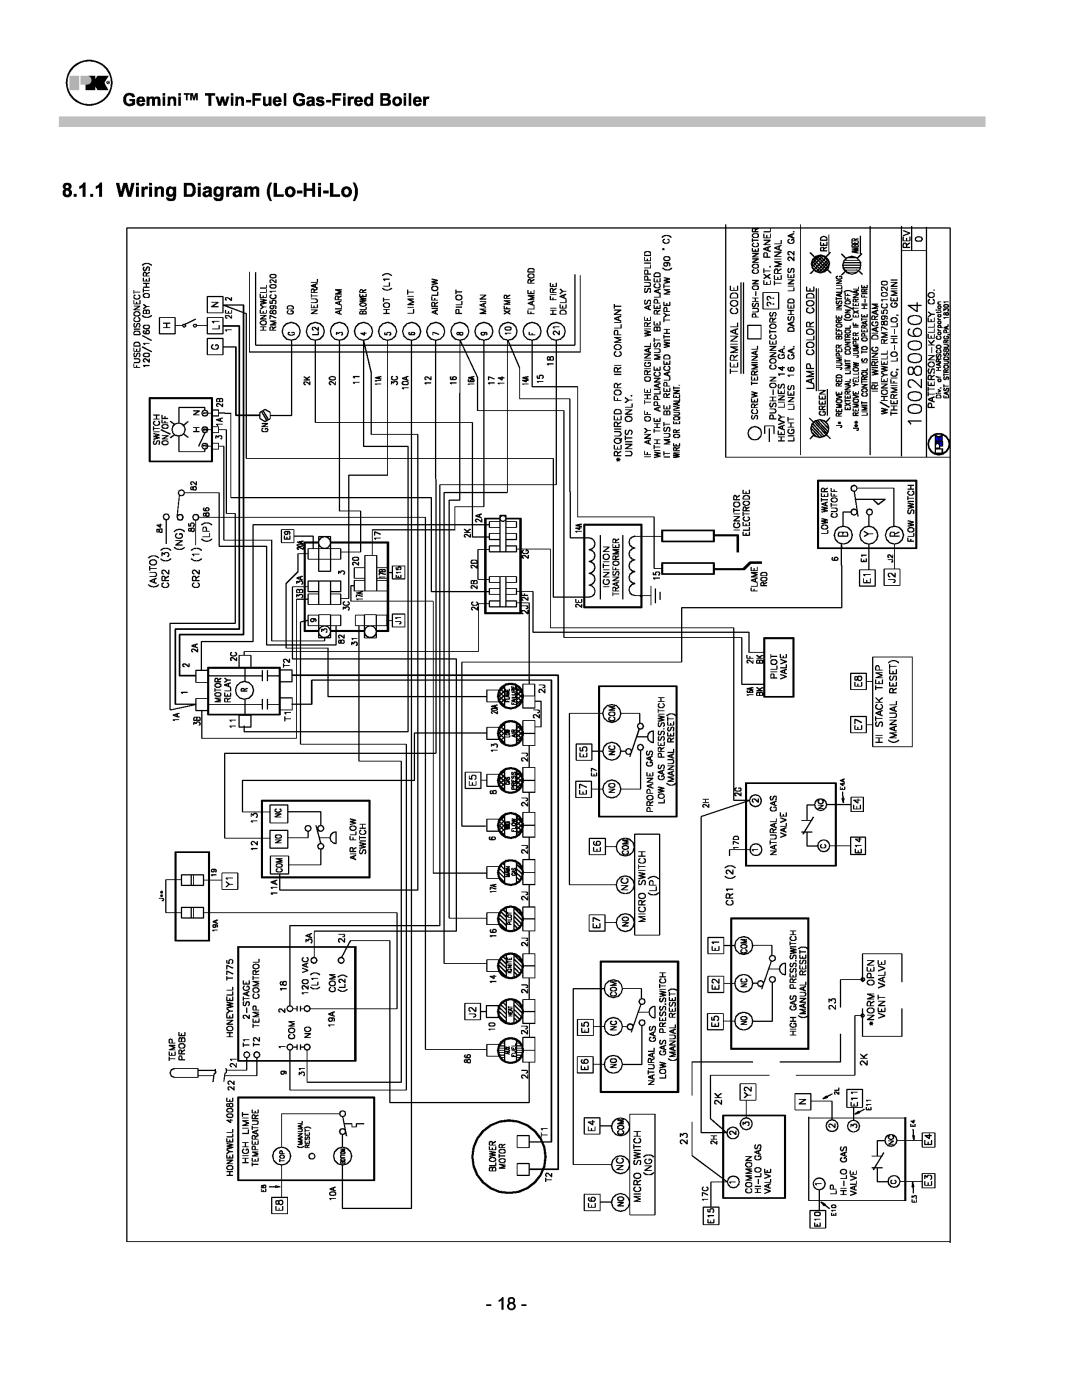 Patterson-Kelley TBIG-03 owner manual Wiring Diagram Lo-Hi-Lo, Gemini Twin-Fuel Gas-FiredBoiler 